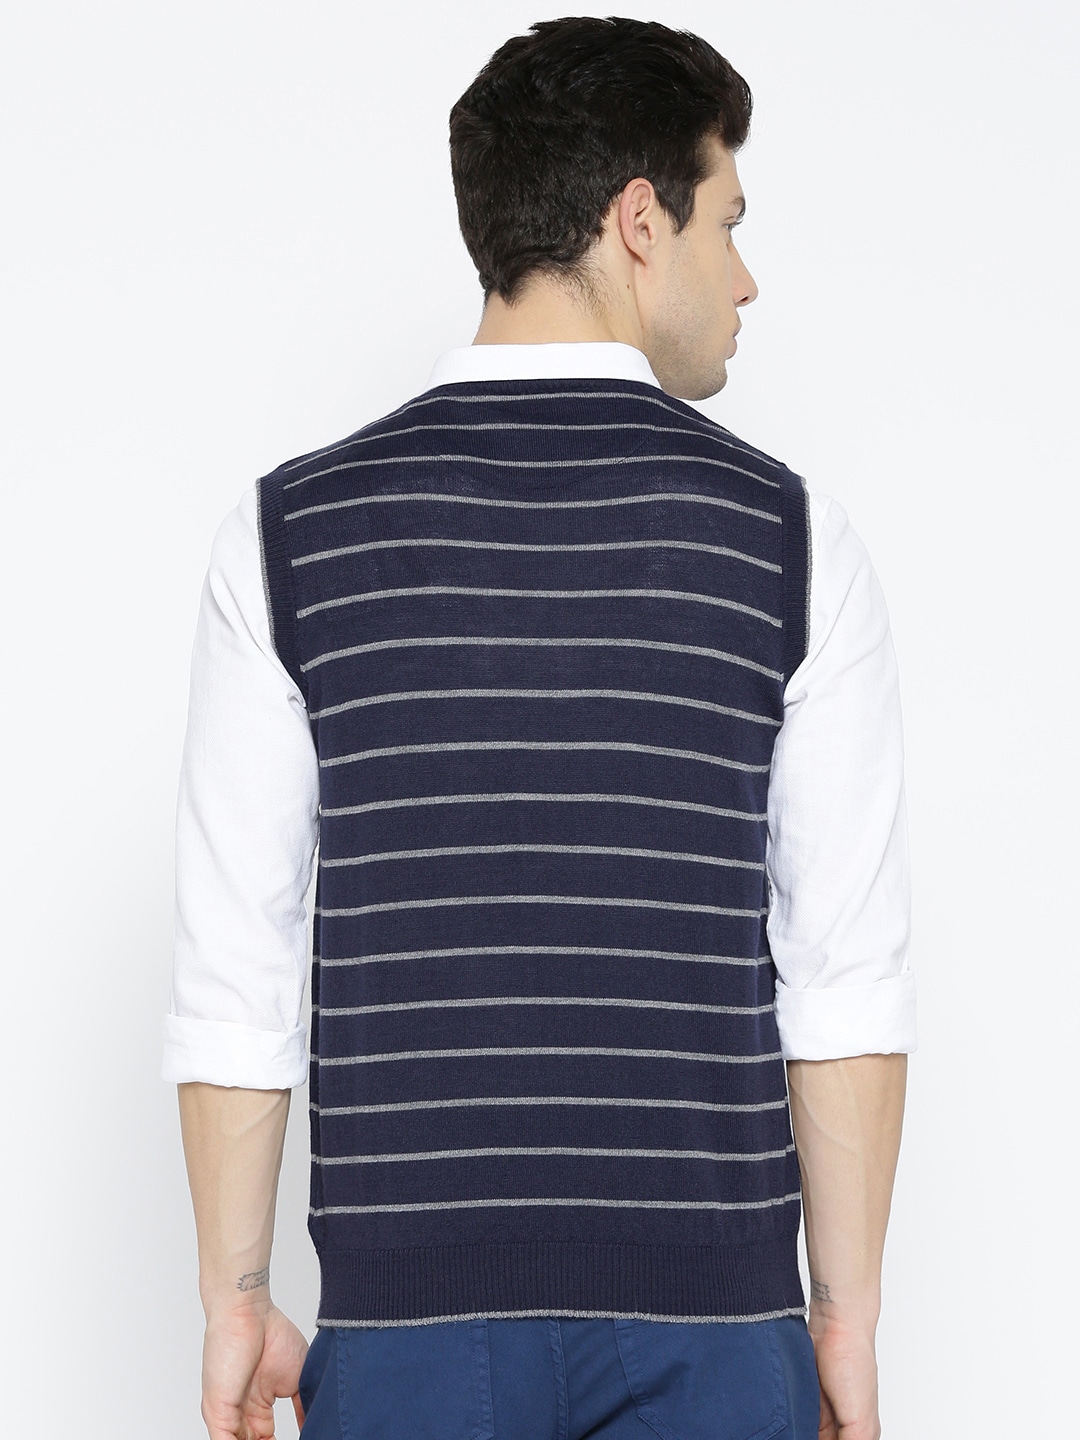 Sleeveless Sweater - Buy Sleeveless Sweater online in India